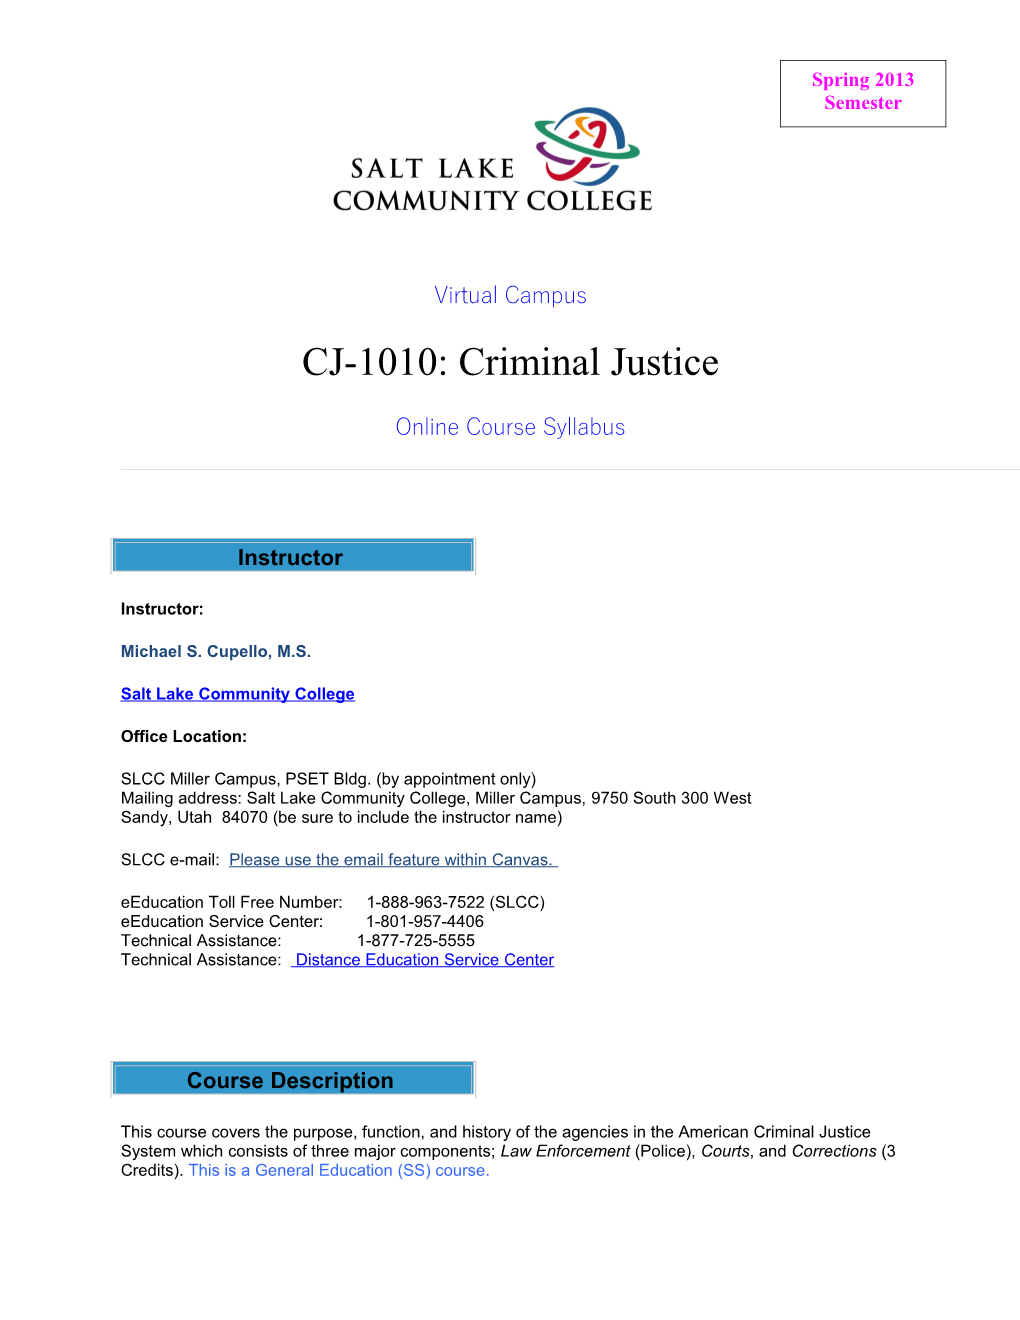 CJ-1010- Criminal Justice